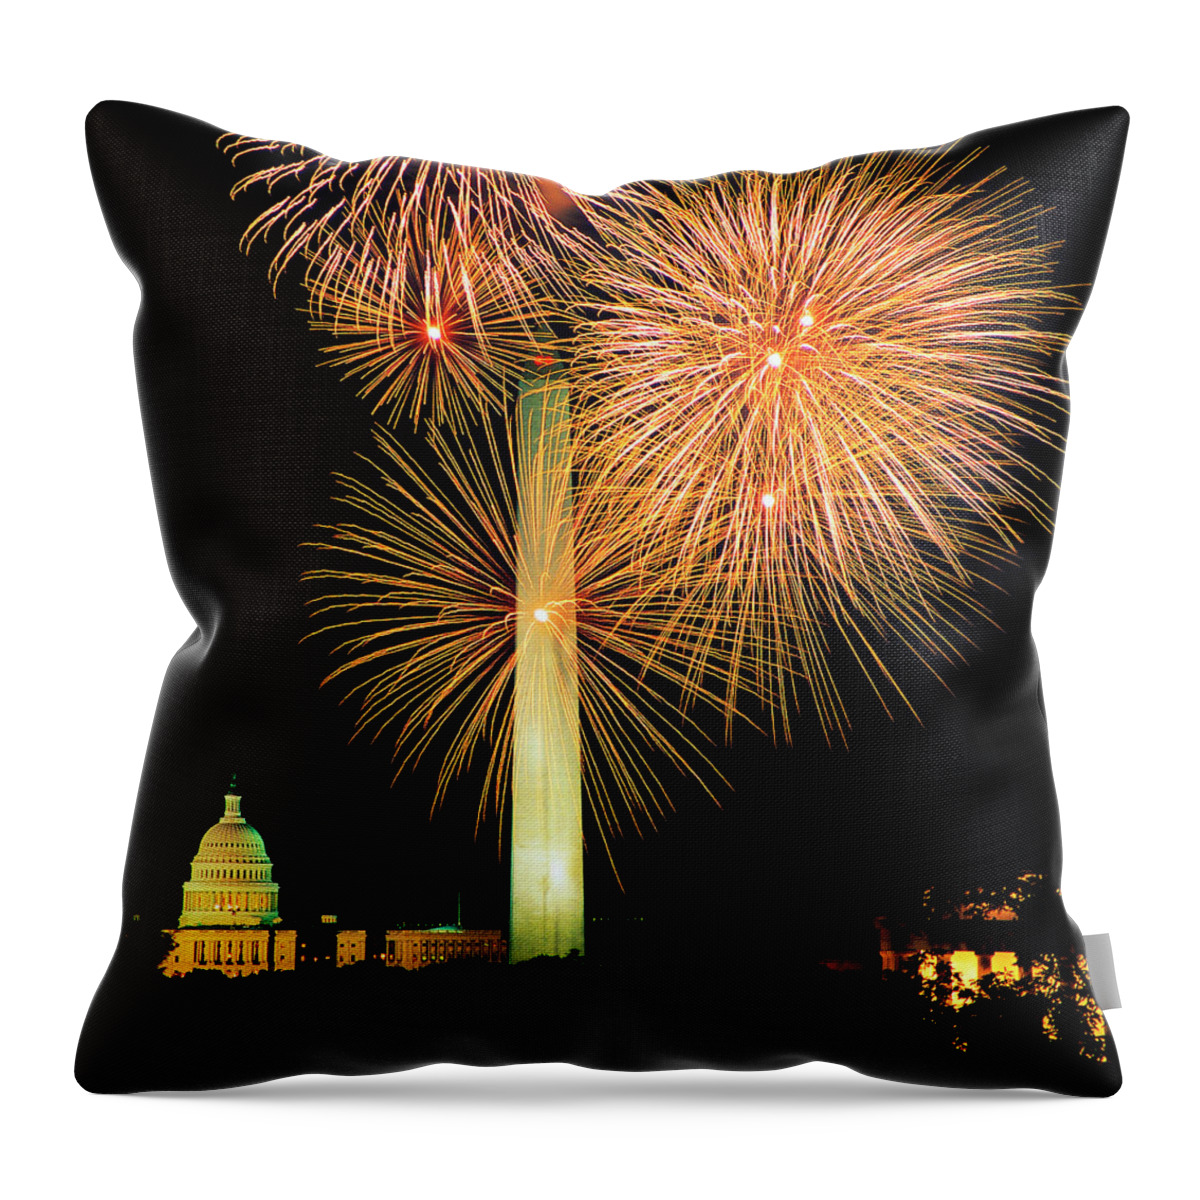 Firework Display Throw Pillow featuring the photograph Fourth Of July Fireworks, Washington Dc by Hisham Ibrahim